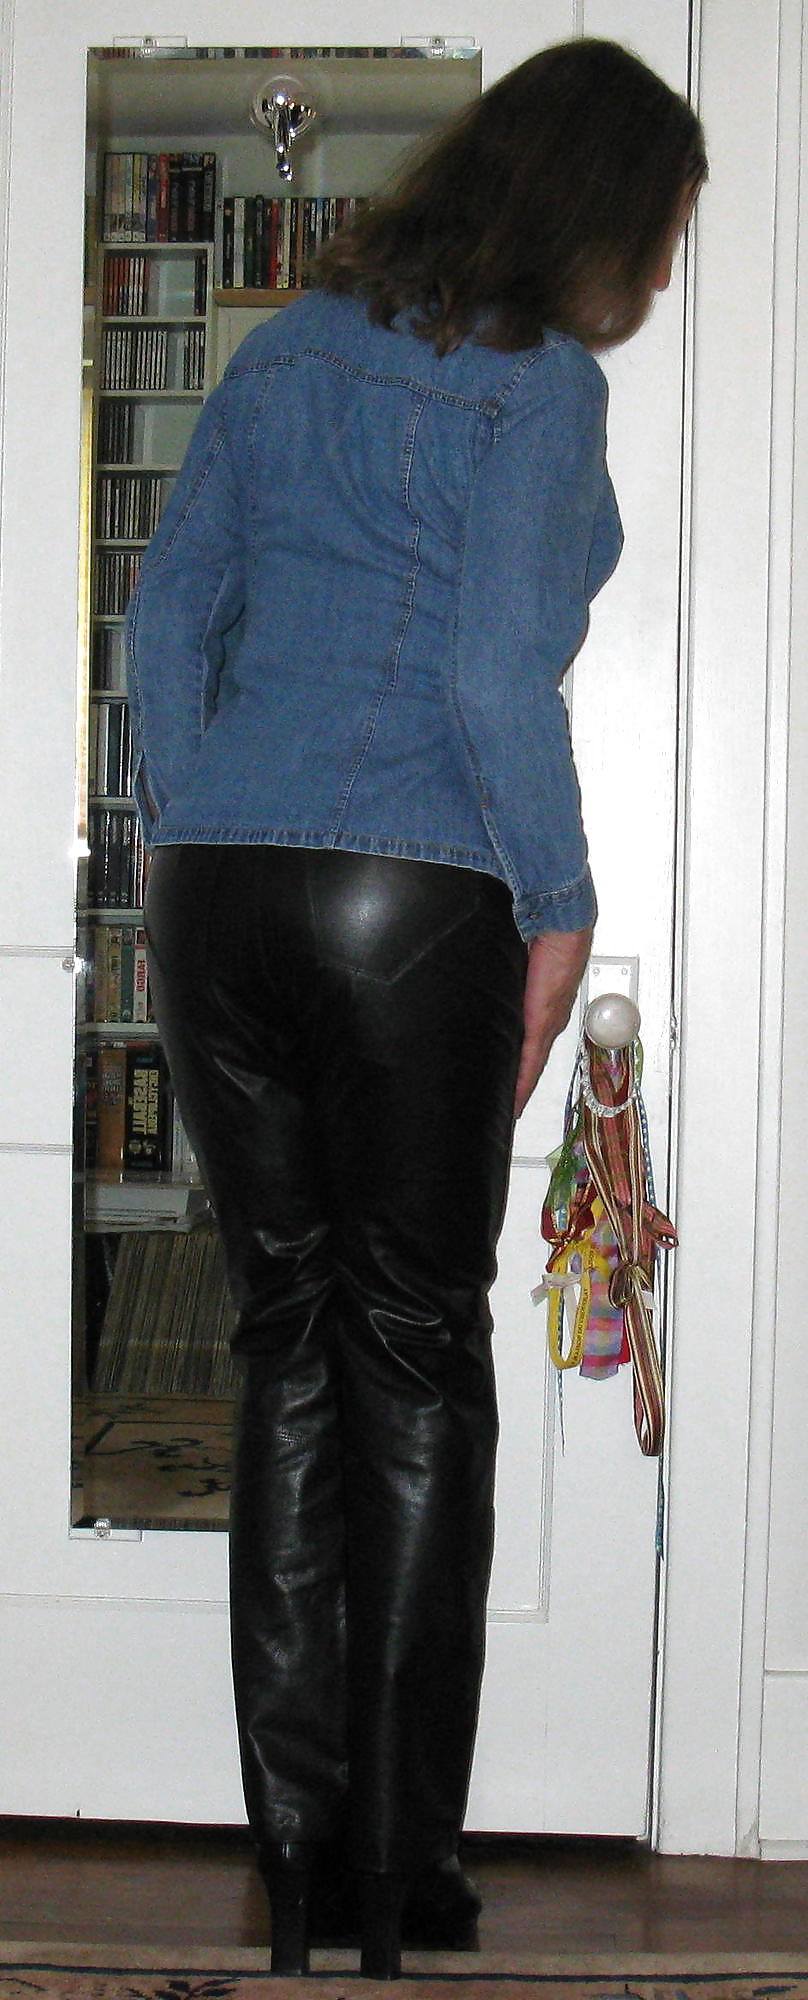 Crossdressing - Leather #2 #11678253